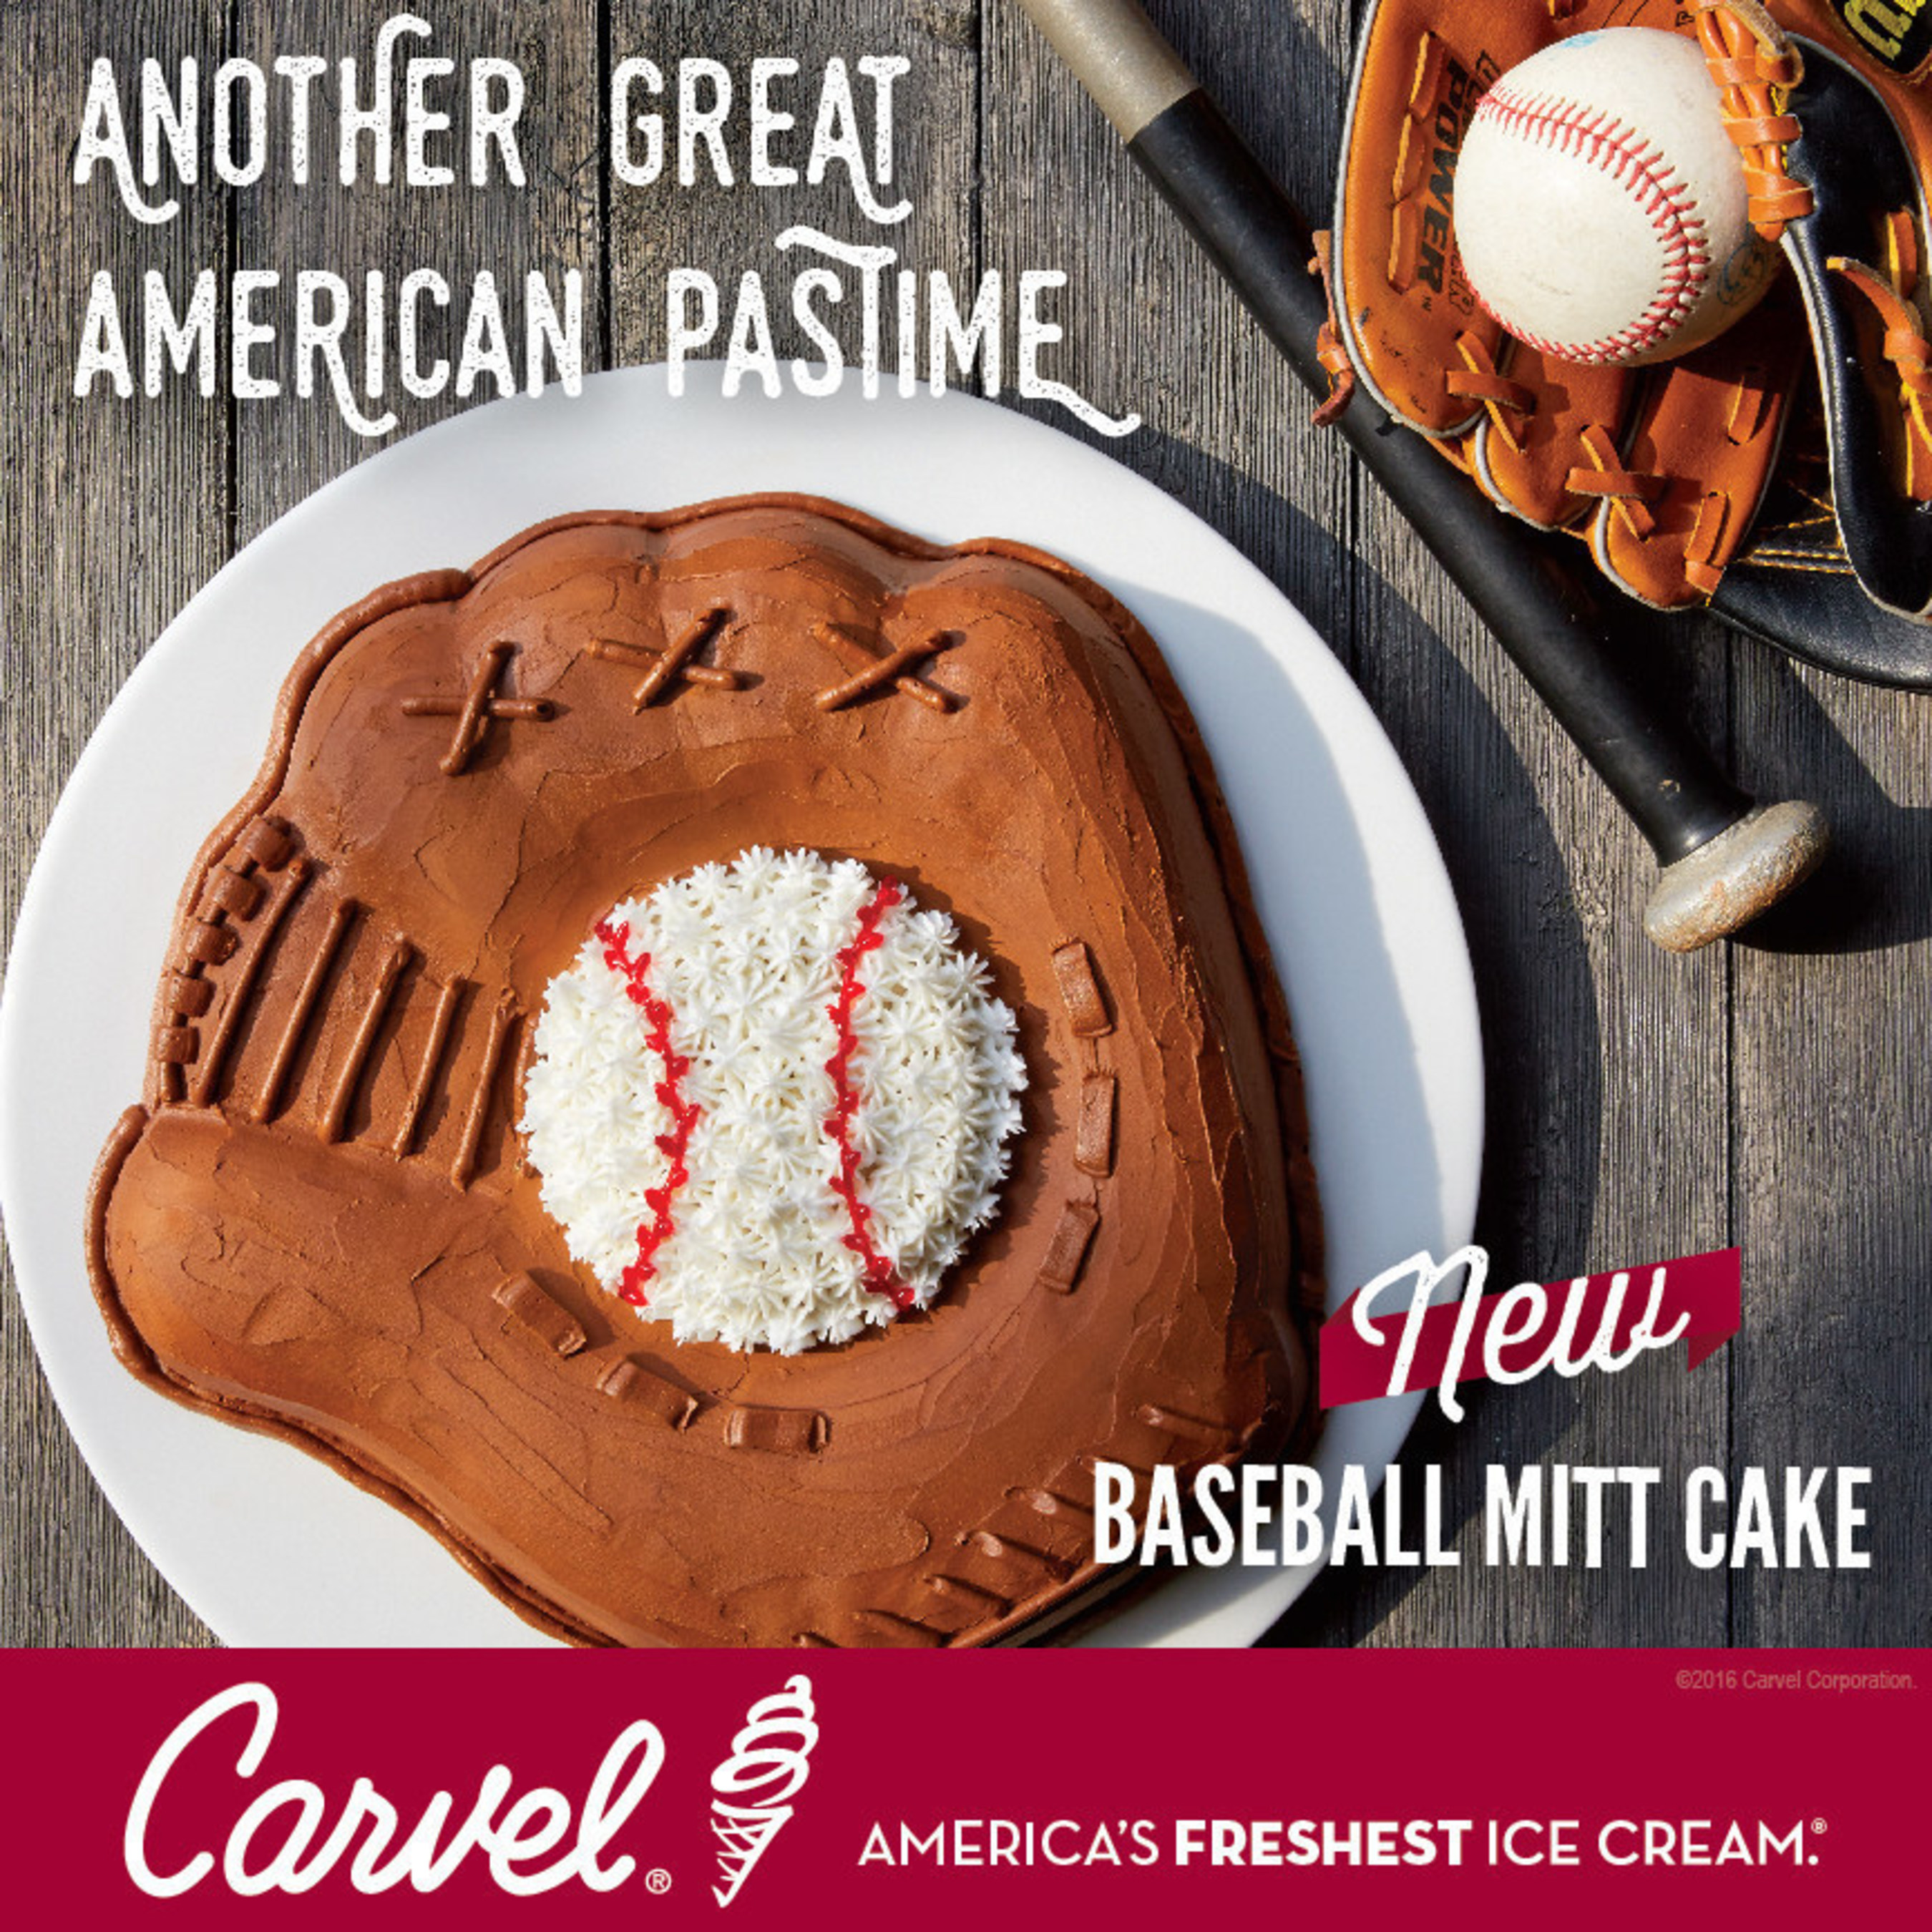 Carvel(R) Celebrates Young Baseball Fans Everywhere with New Baseball Mitt Ice Cream Cakes